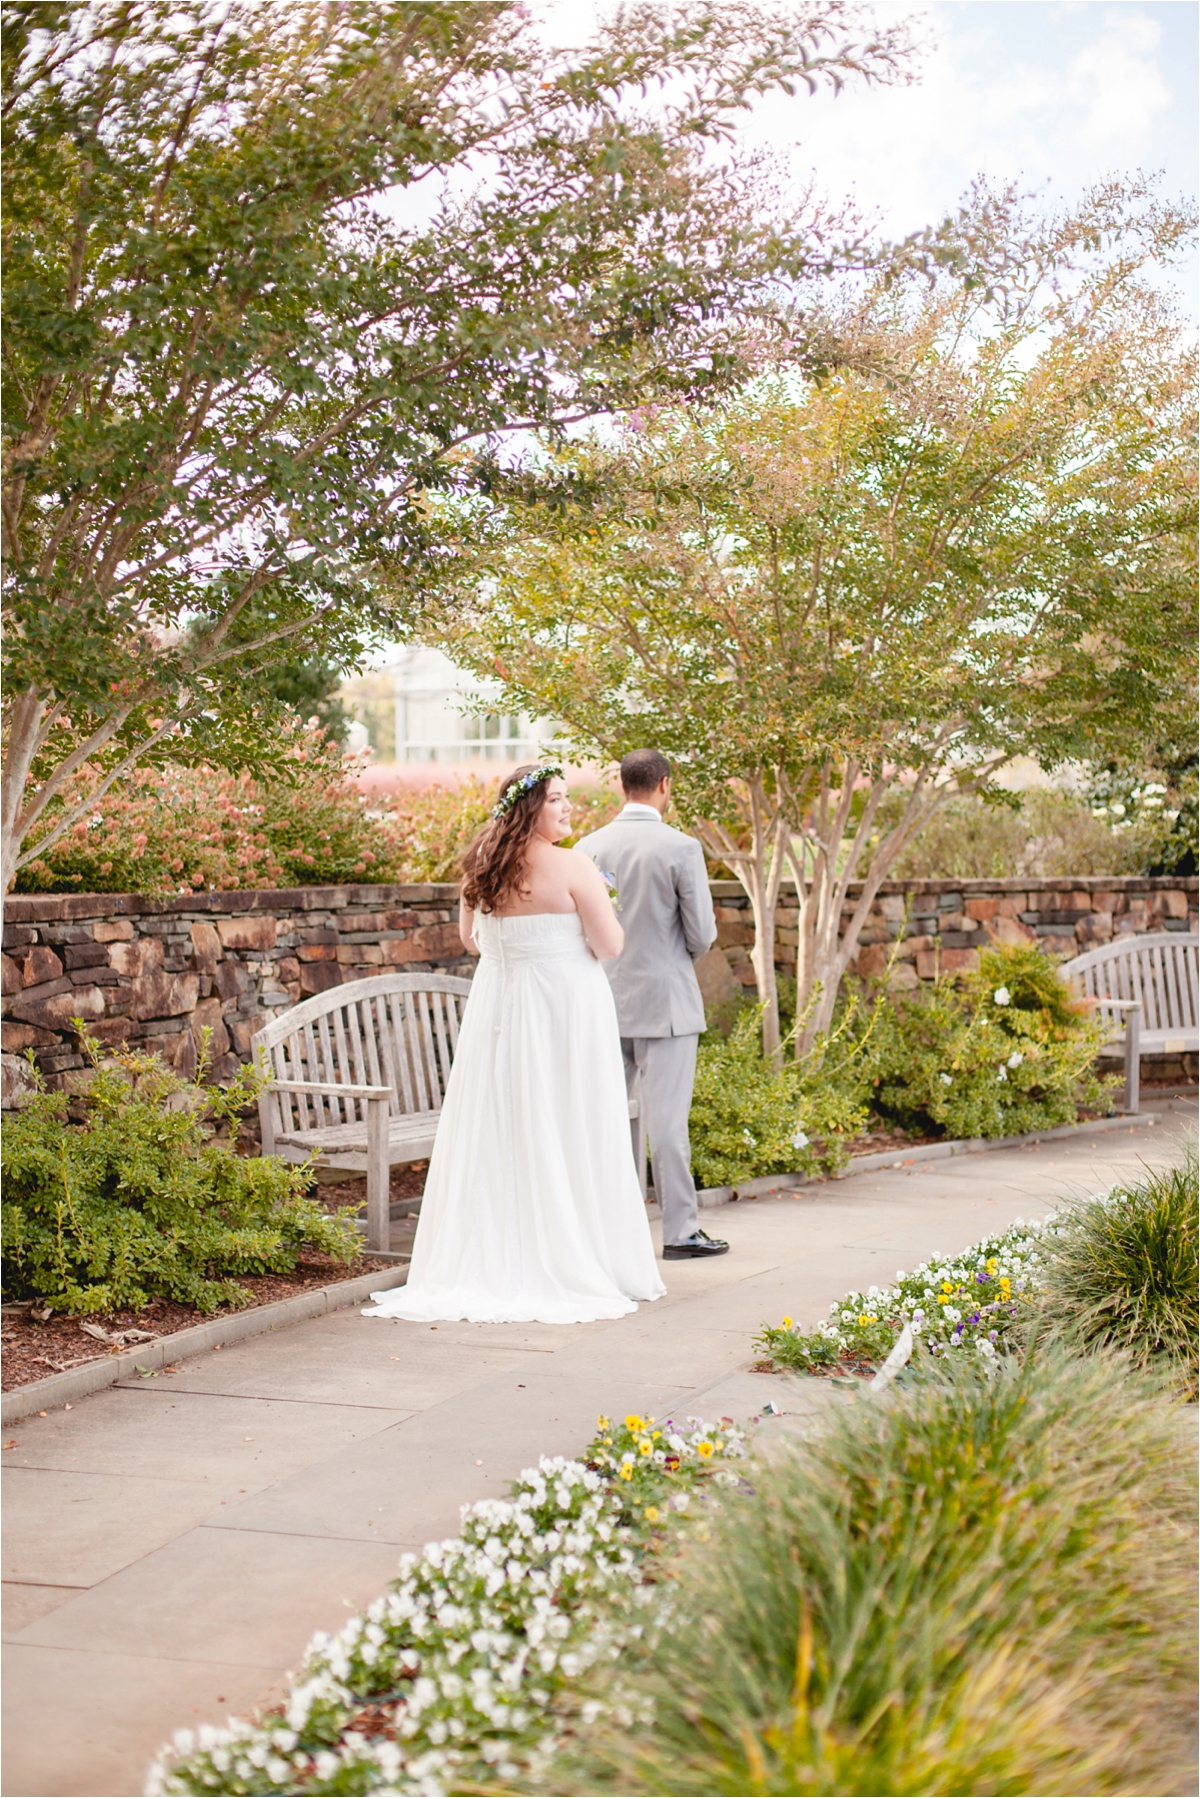 Amanda-Ben-Wedding-Photographer-Virginia-Lewis-Ginter-botanical-garden-Alabama-Mobile-Photography_0029